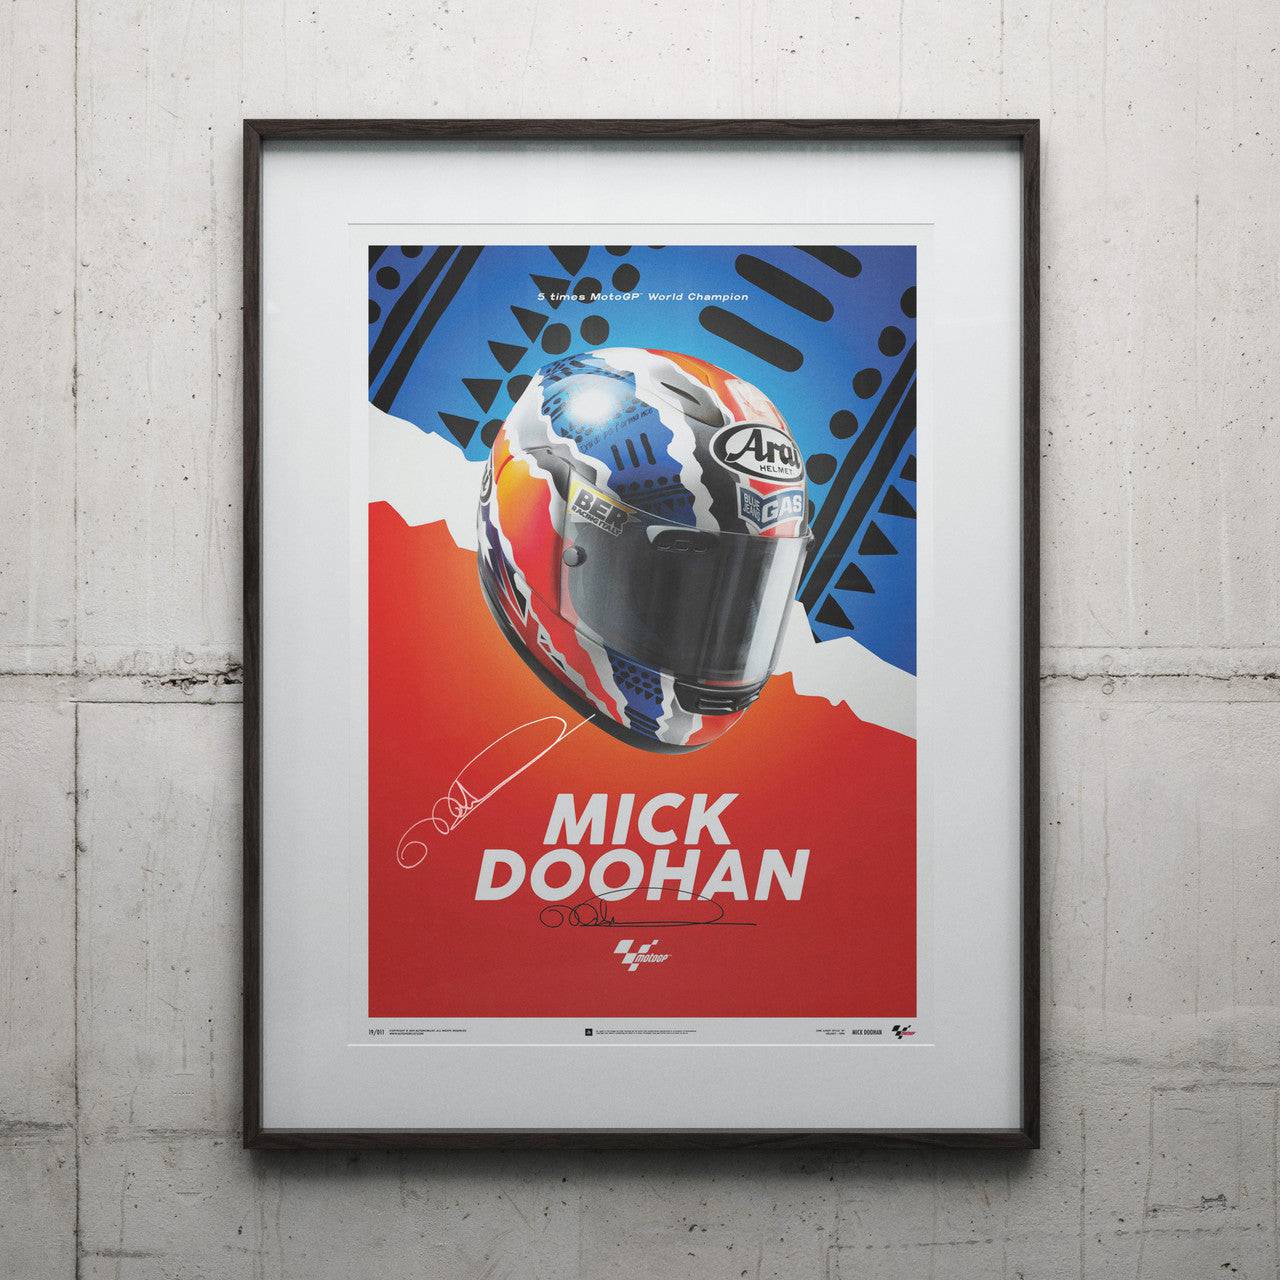 Mick Doohan - Helmet - 1999 - Poster | Signed Signed